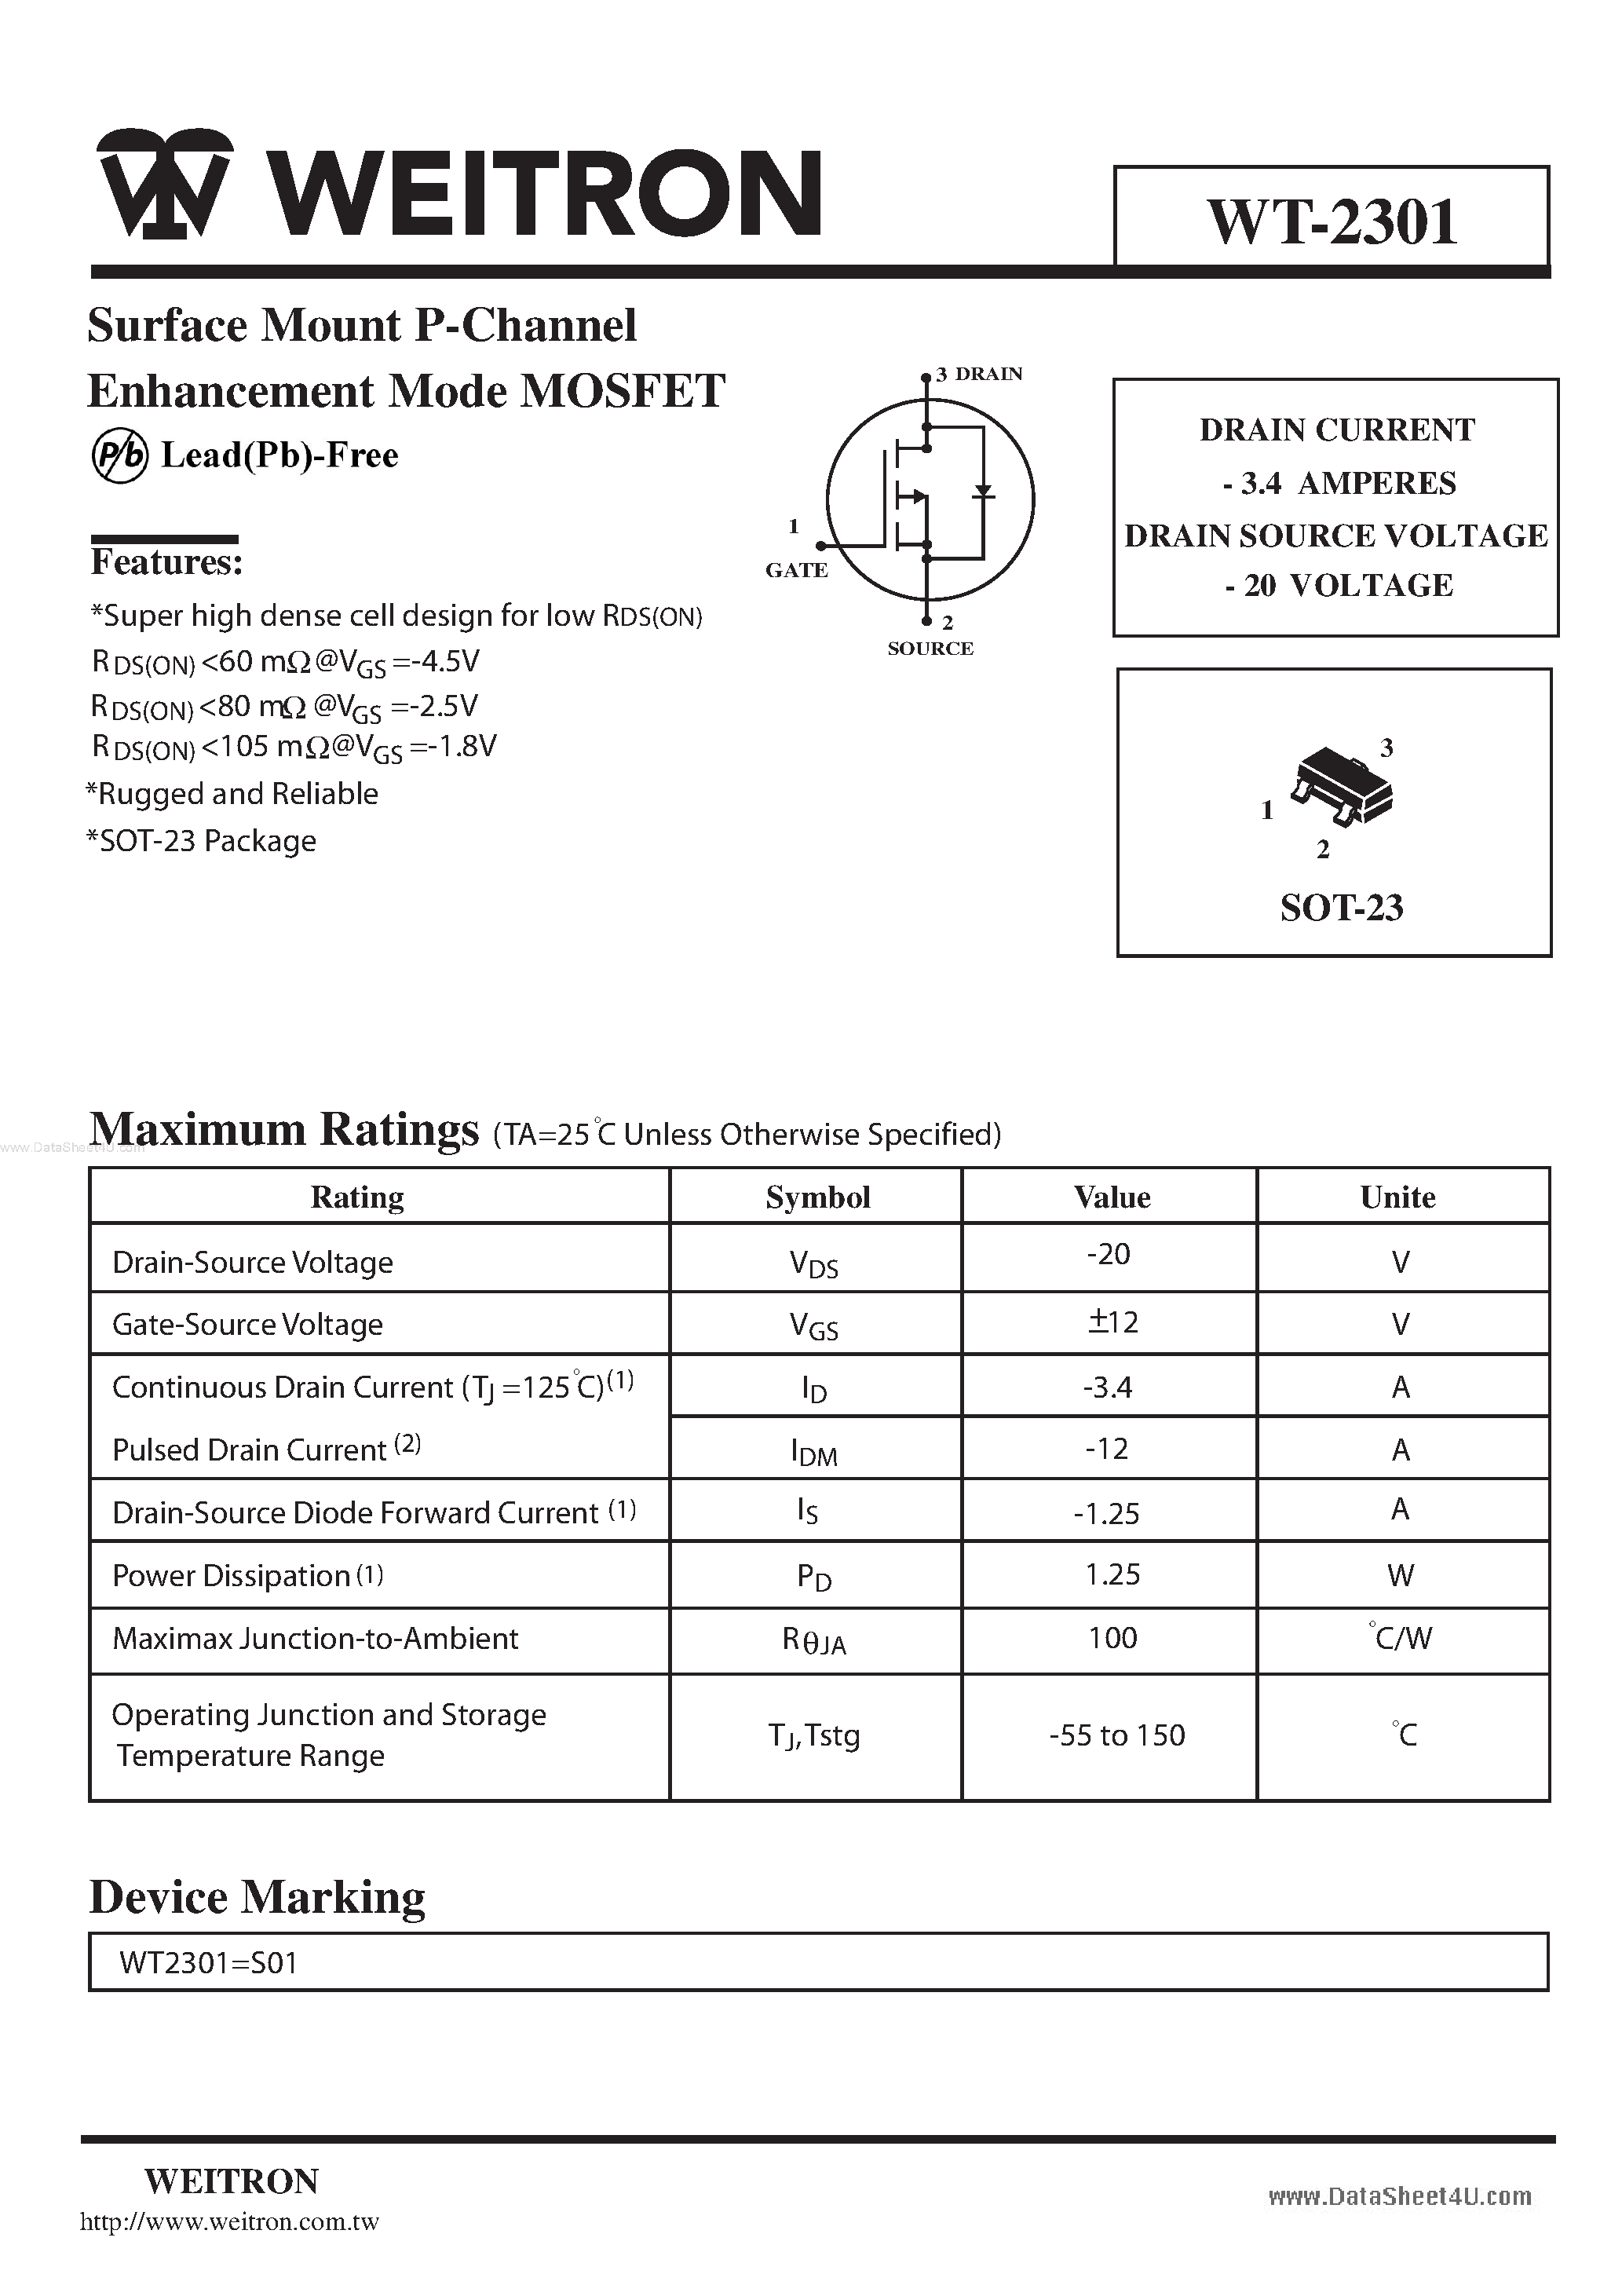 Даташит WT-2301 - Surface Mount P-Channel Enhancement Mode MOSFET страница 1